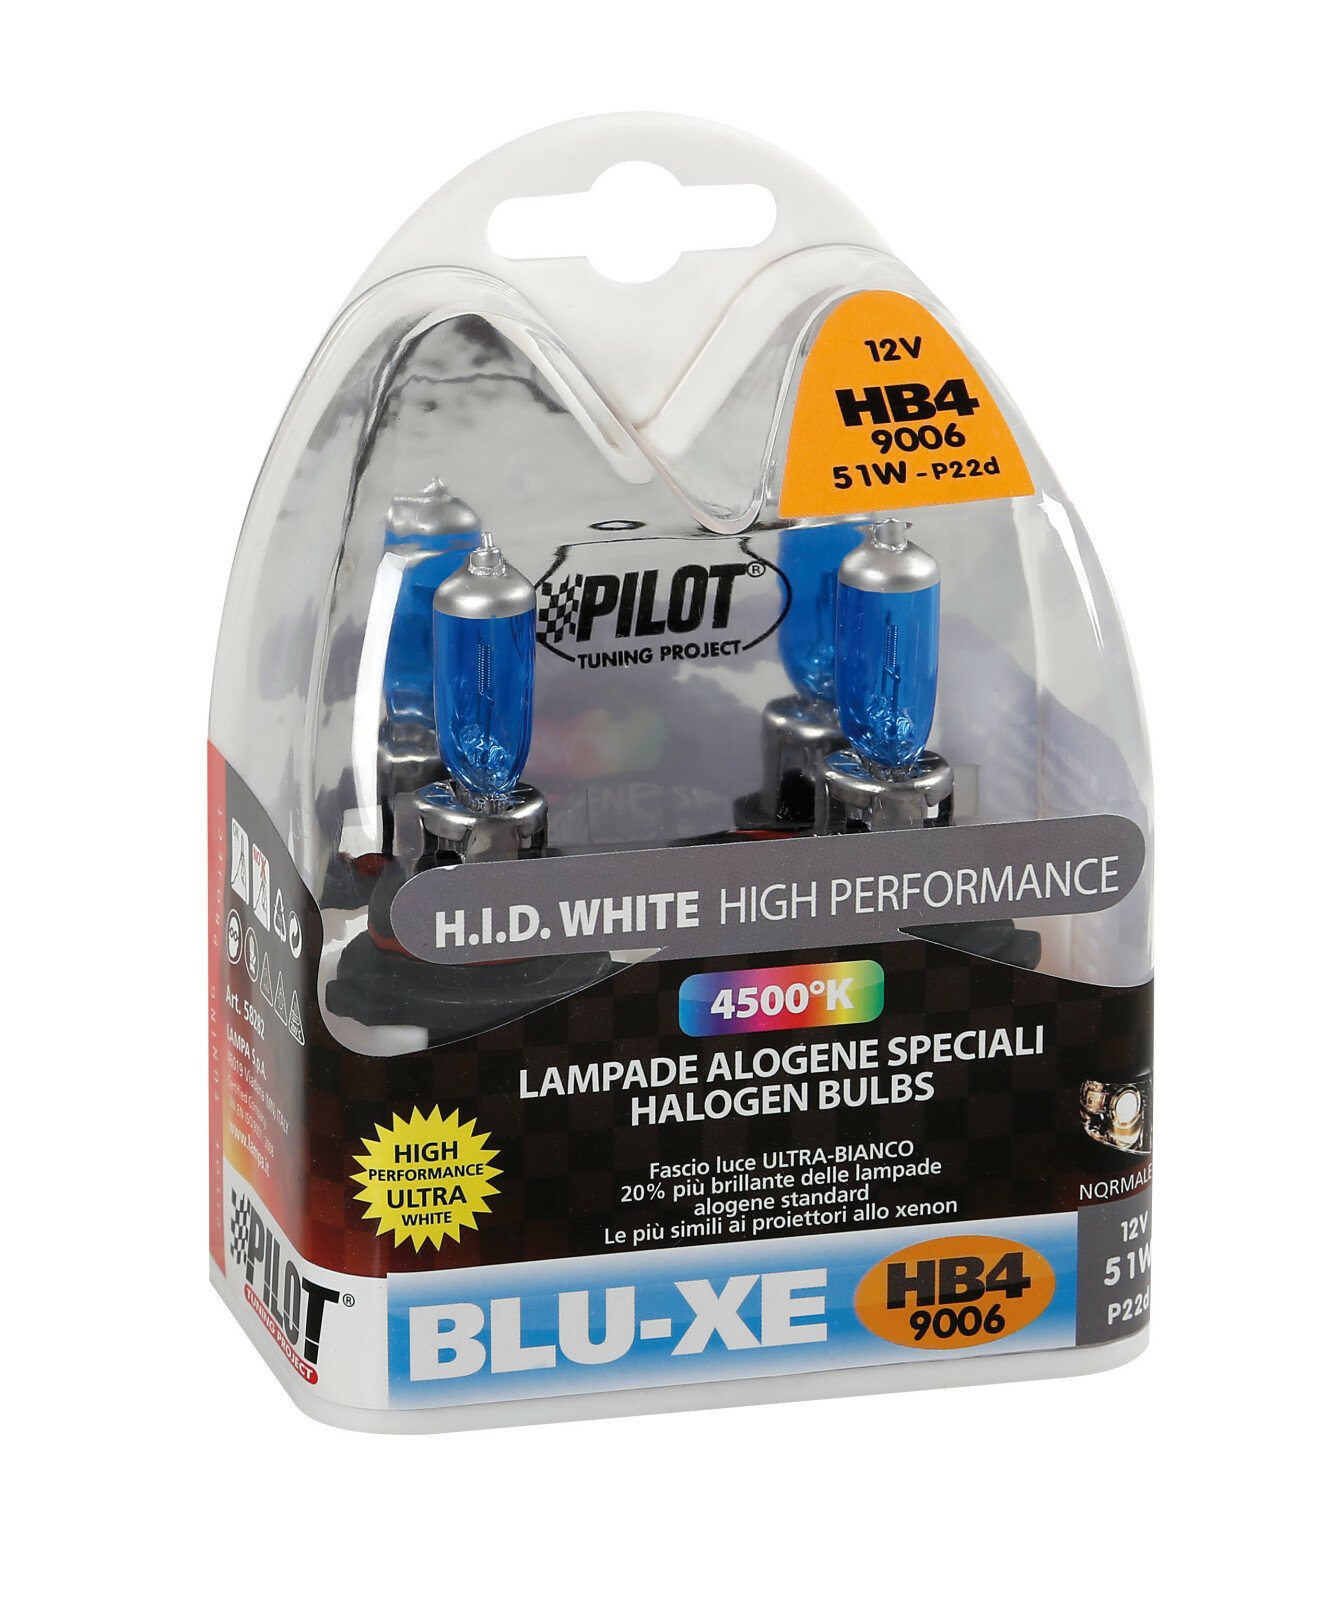 12V Blu-Xe halogen lamp - HB4 9006 - 51W - P22d - 2 pcs thumb